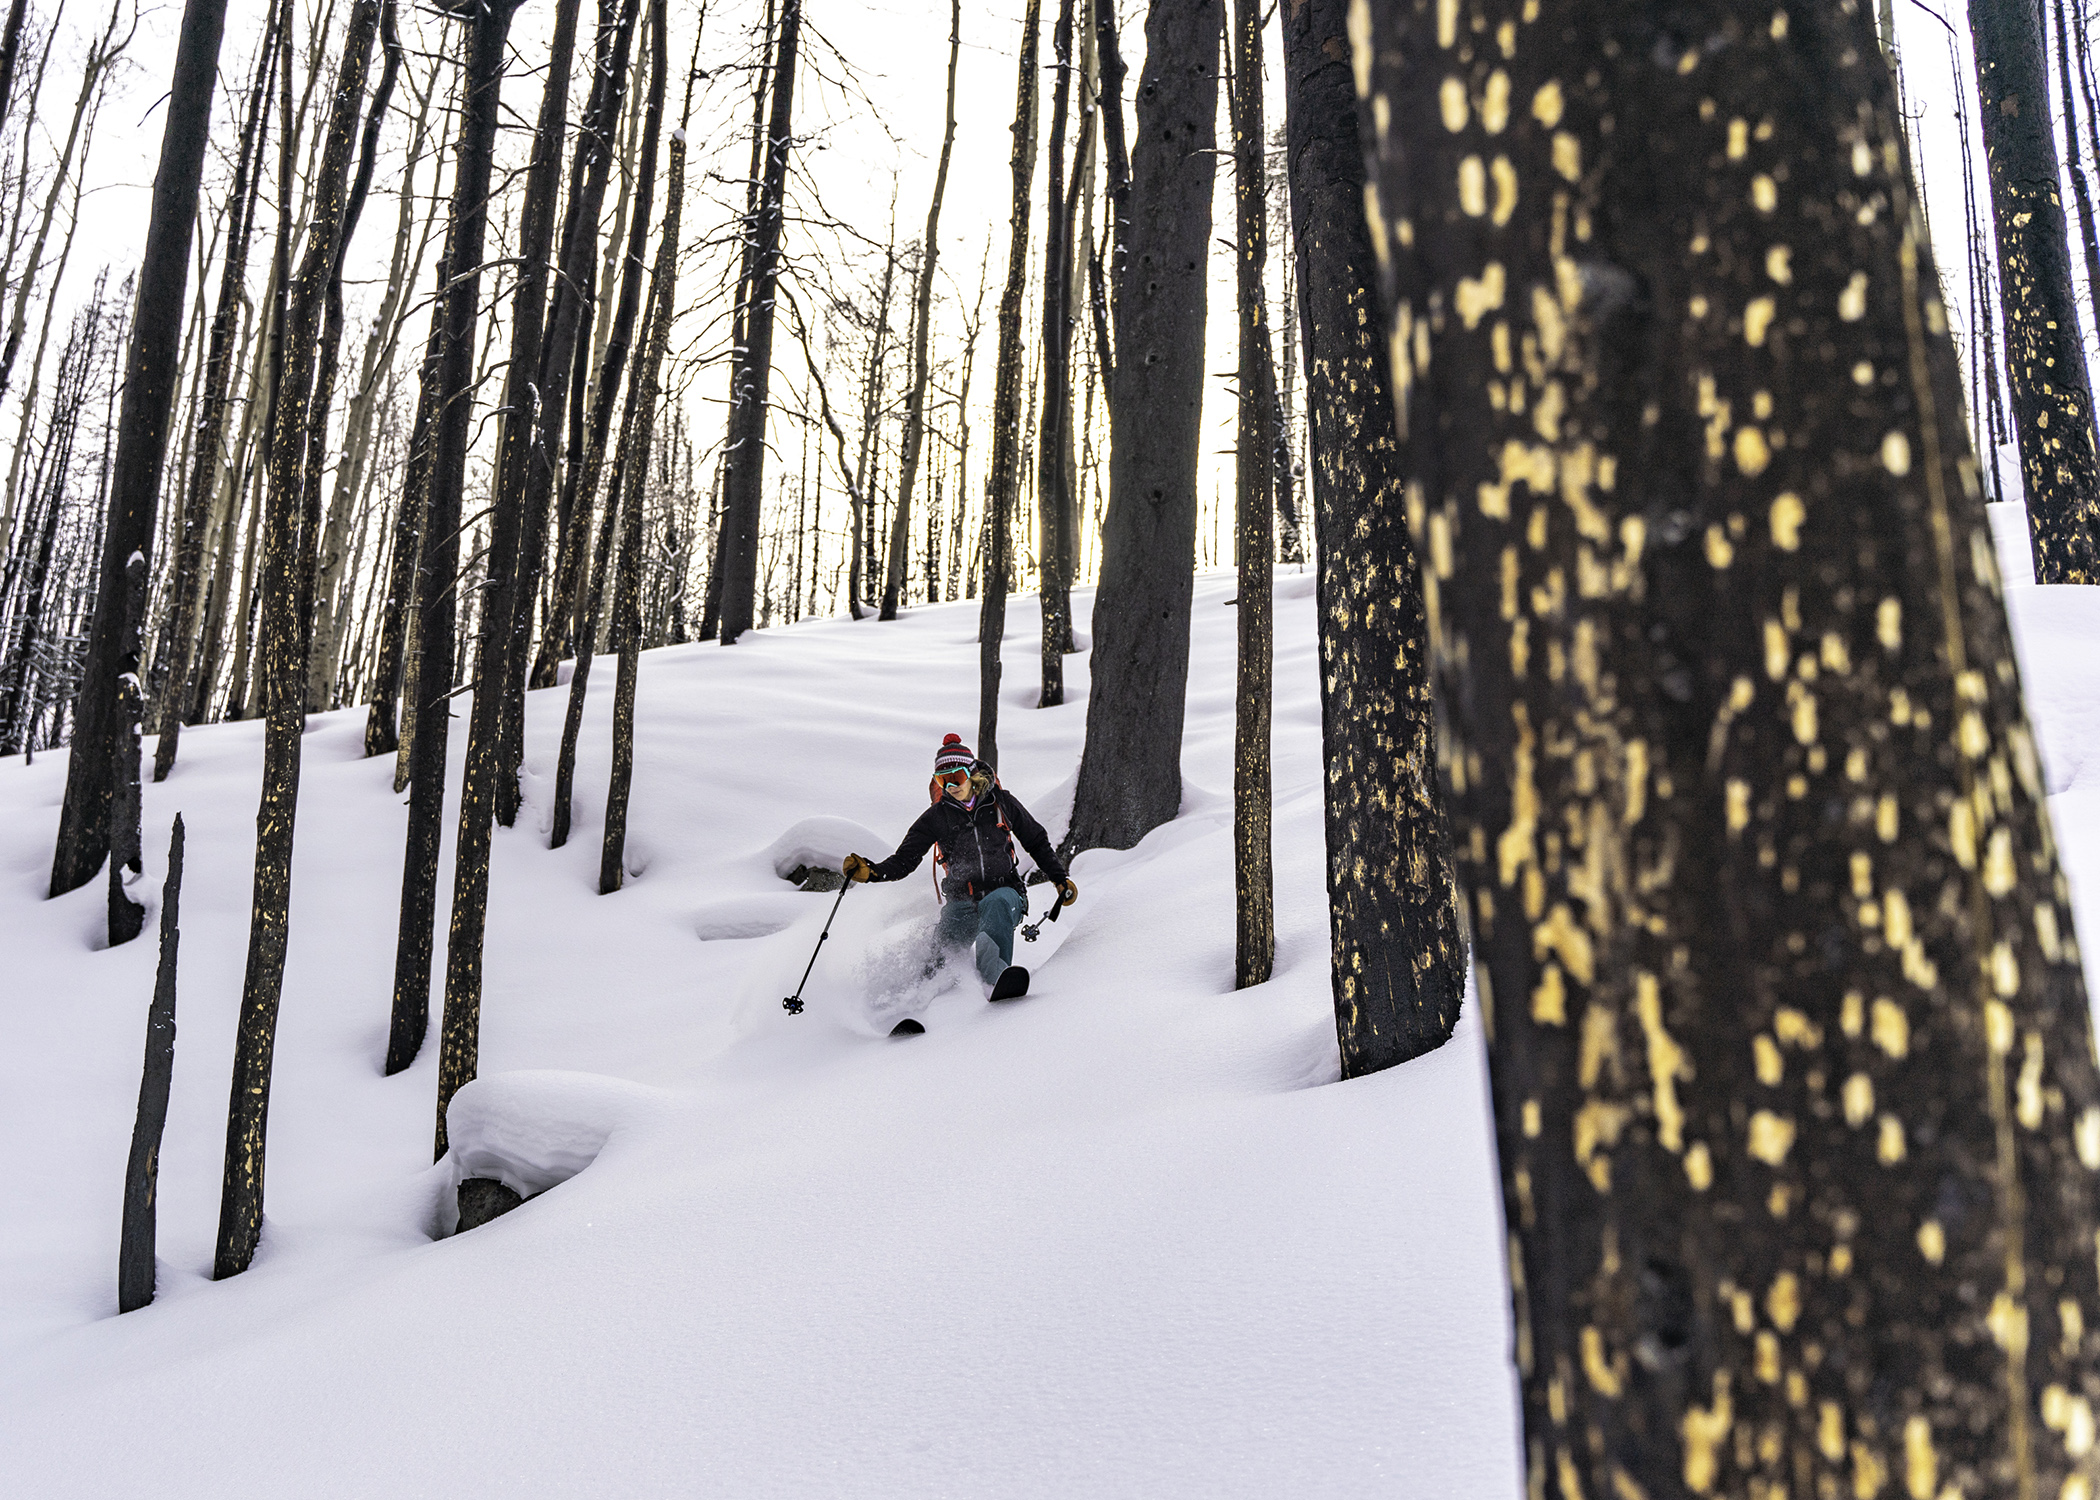 Ann Driggers navigating trees - Women's backcountry skis